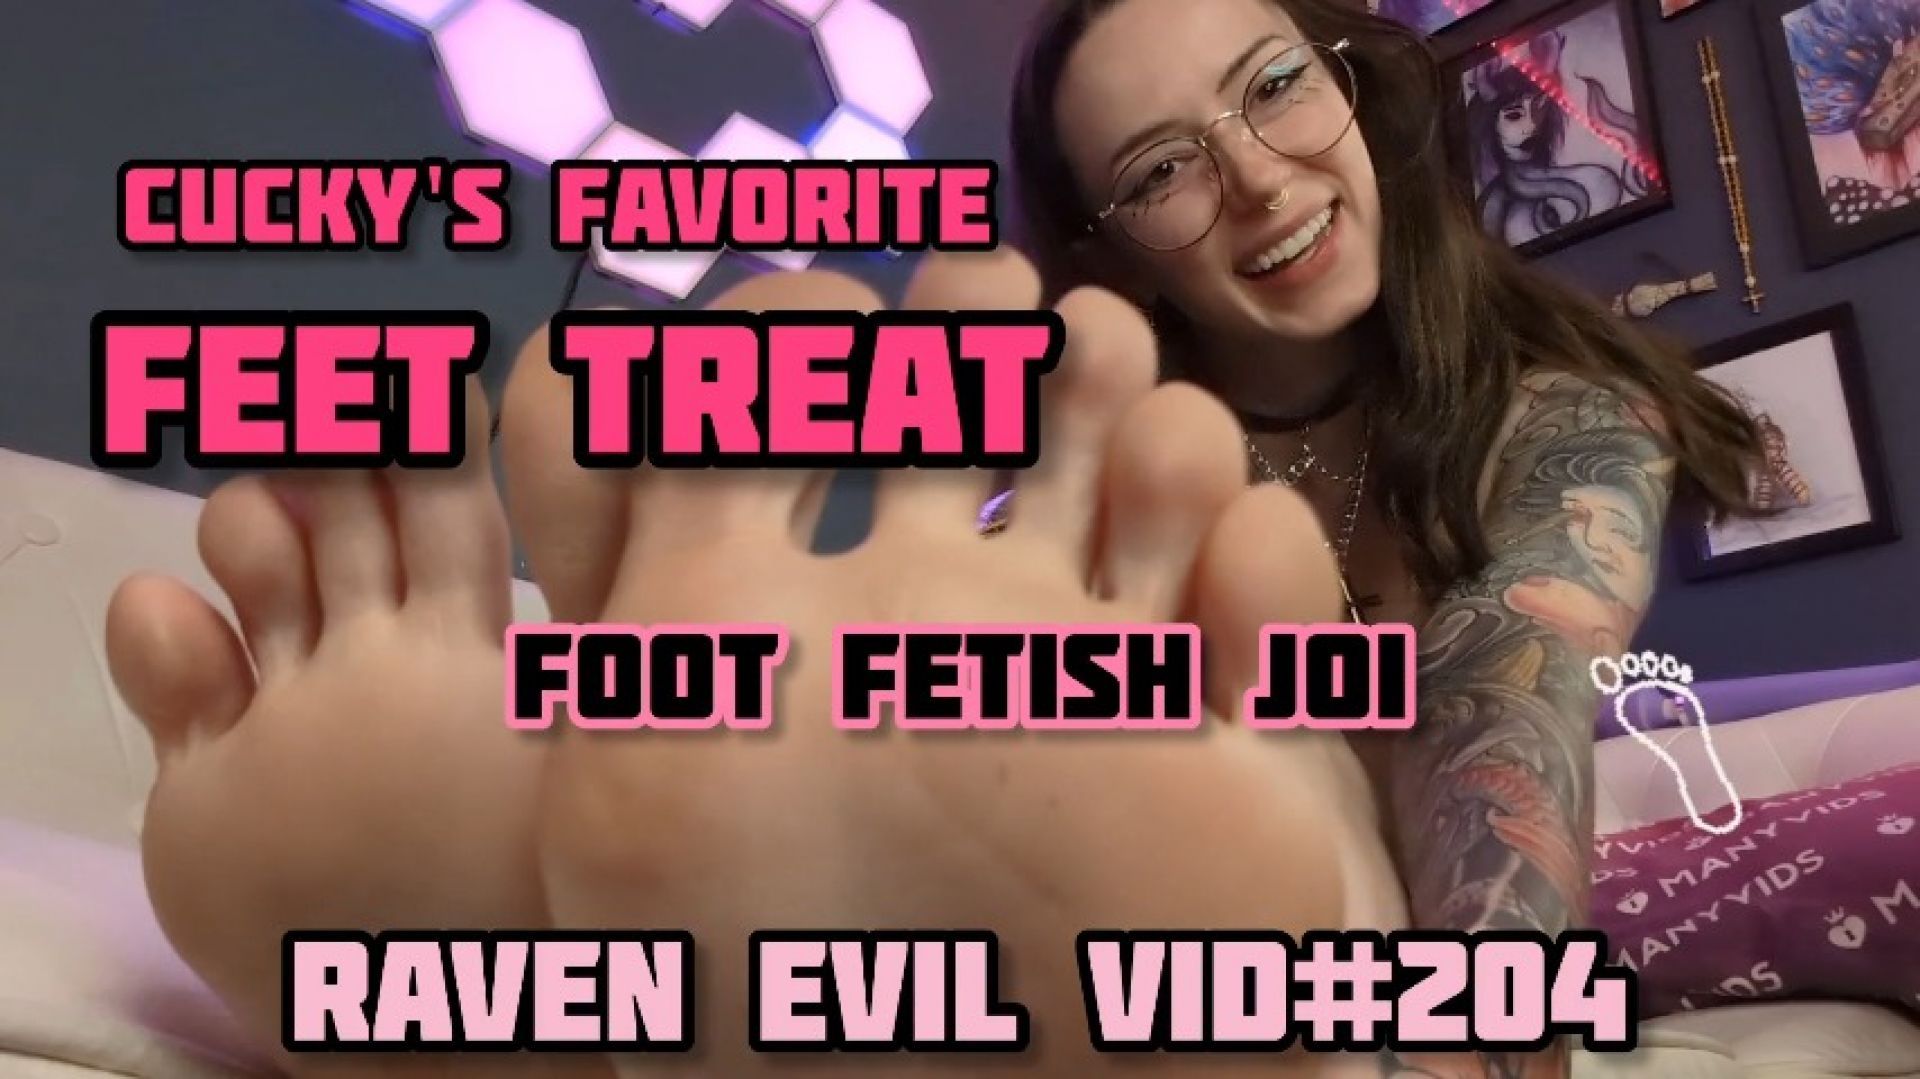 Cucky's Favorite Feet Treat - Foot Fetish JOI